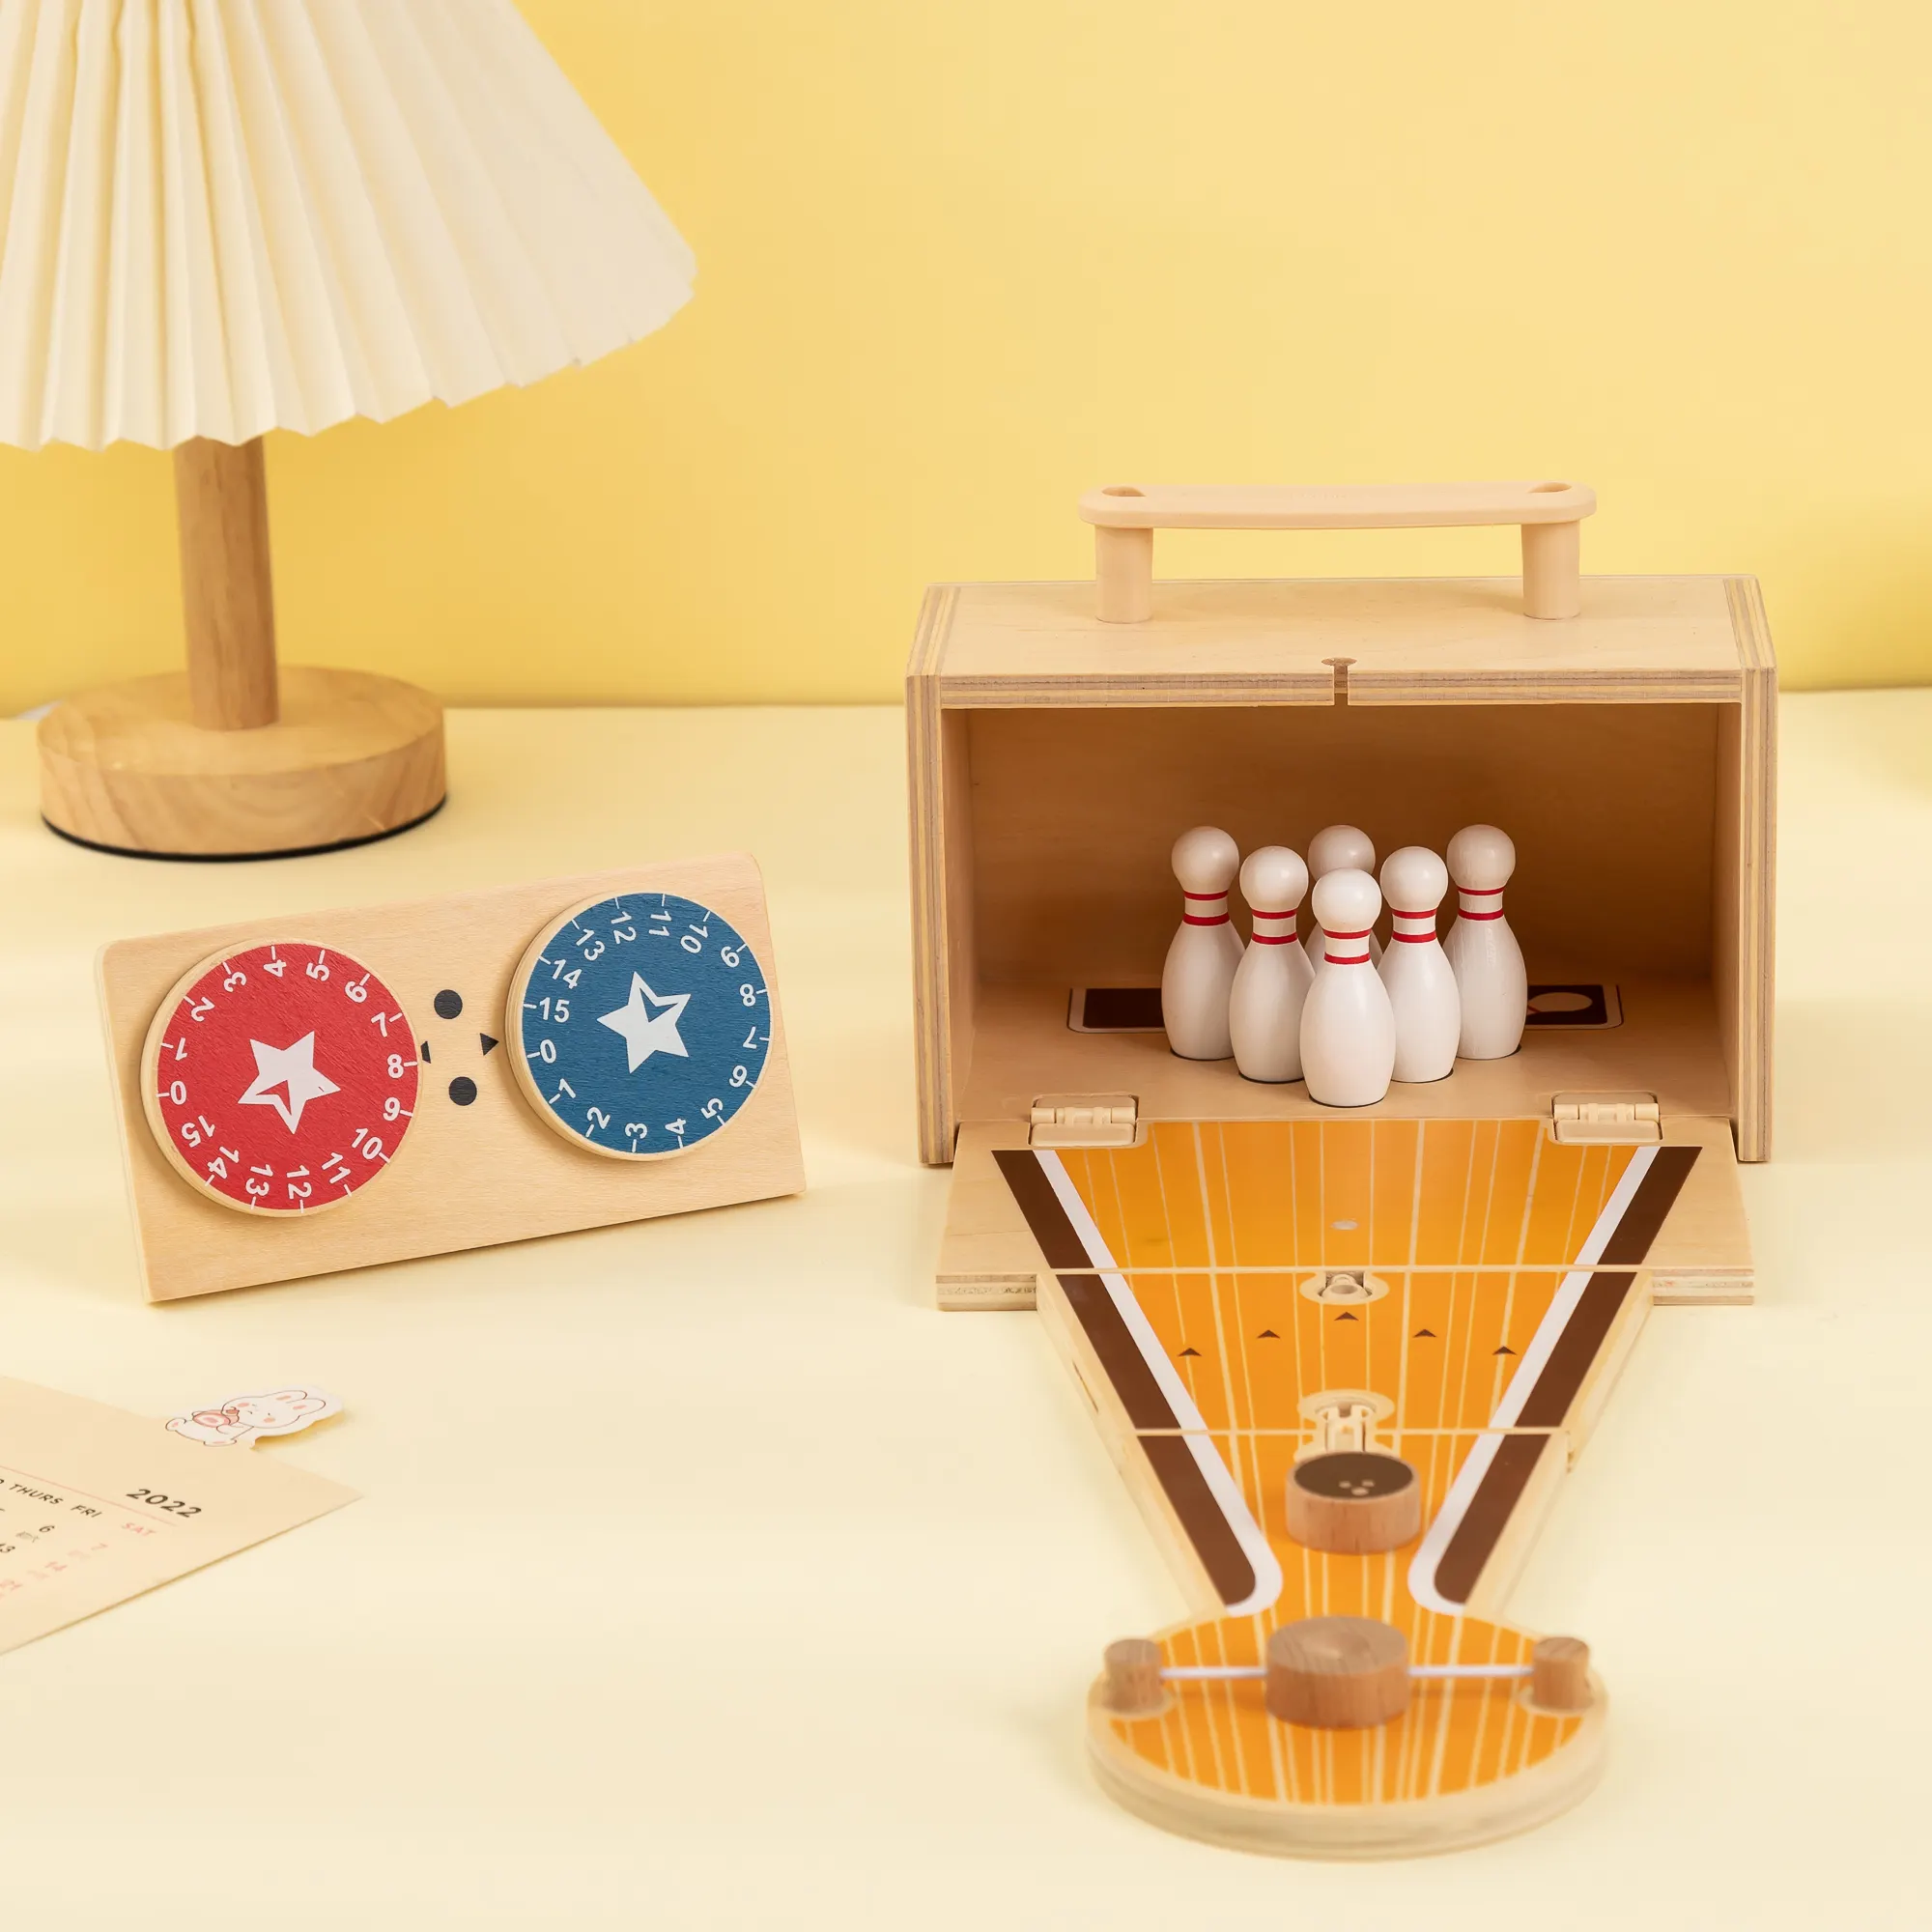 UDEAS mainan meja anak-anak, permainan Bowling kayu Mini atas meja dalam ruangan untuk anak-anak